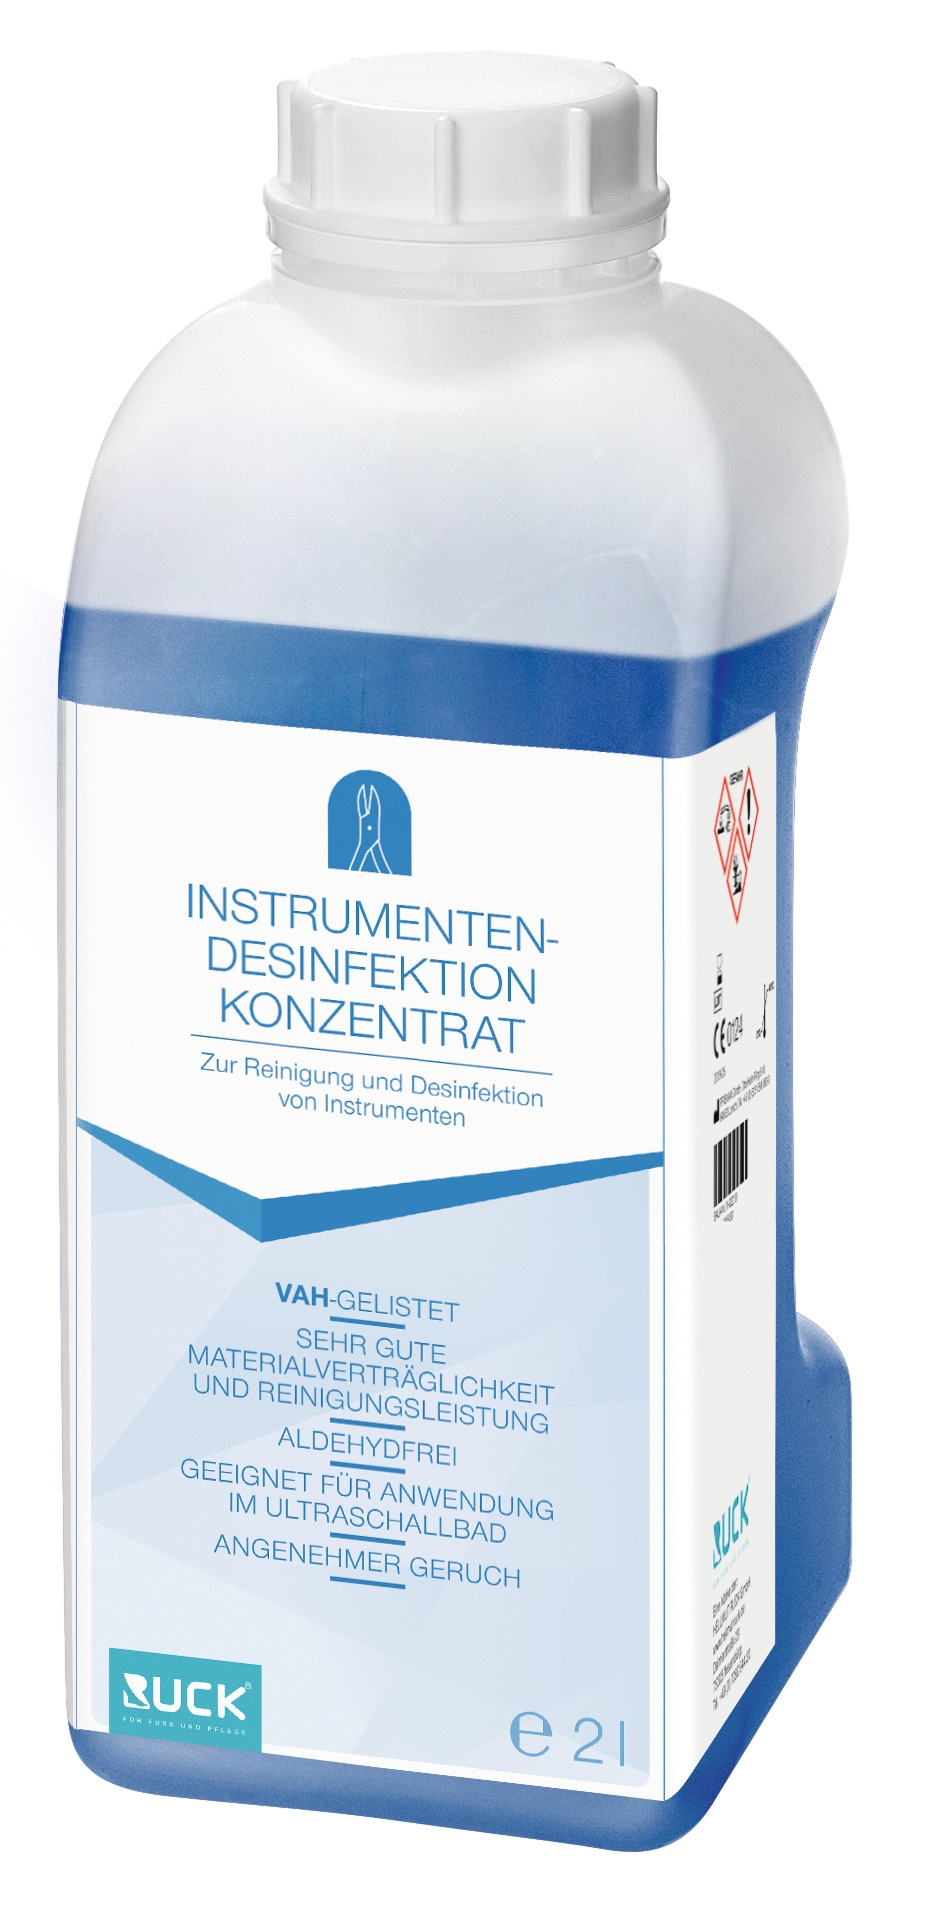 RUCK Instrumentendesinfektion Konzentrat | 2 Liter